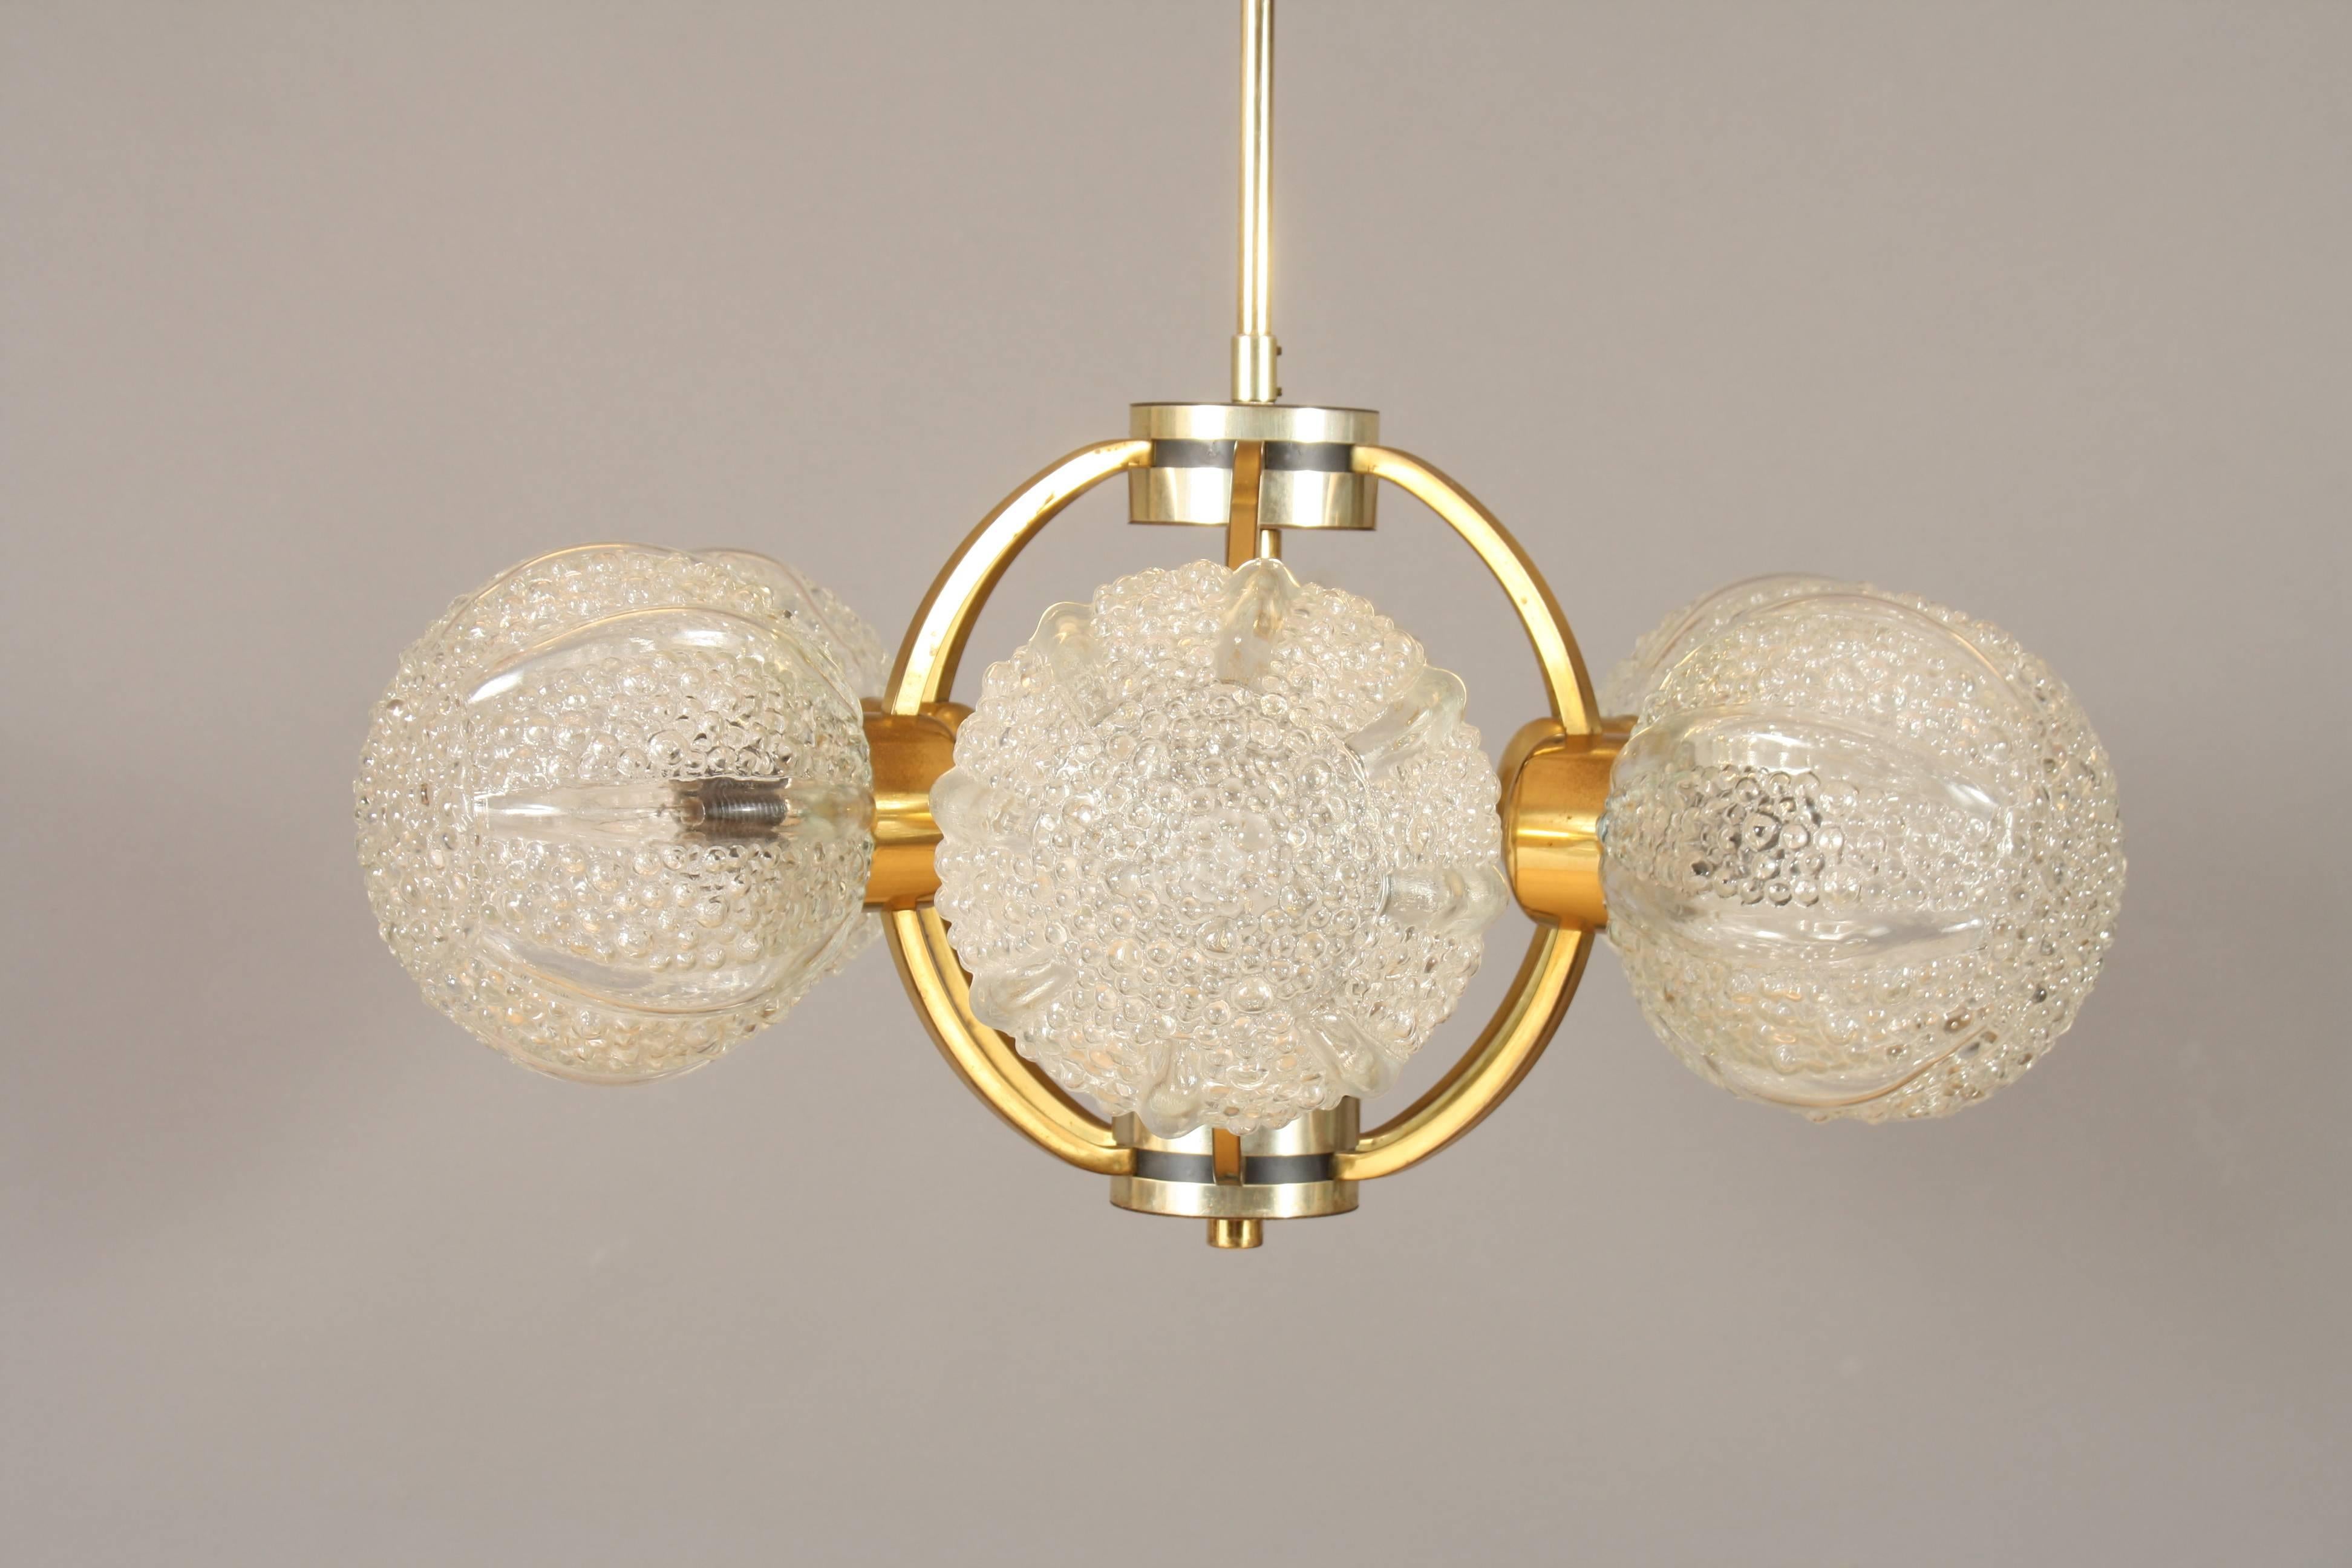 Beautiful brass and bubble glass Sputnik chandelier.
Germany, 1960s.